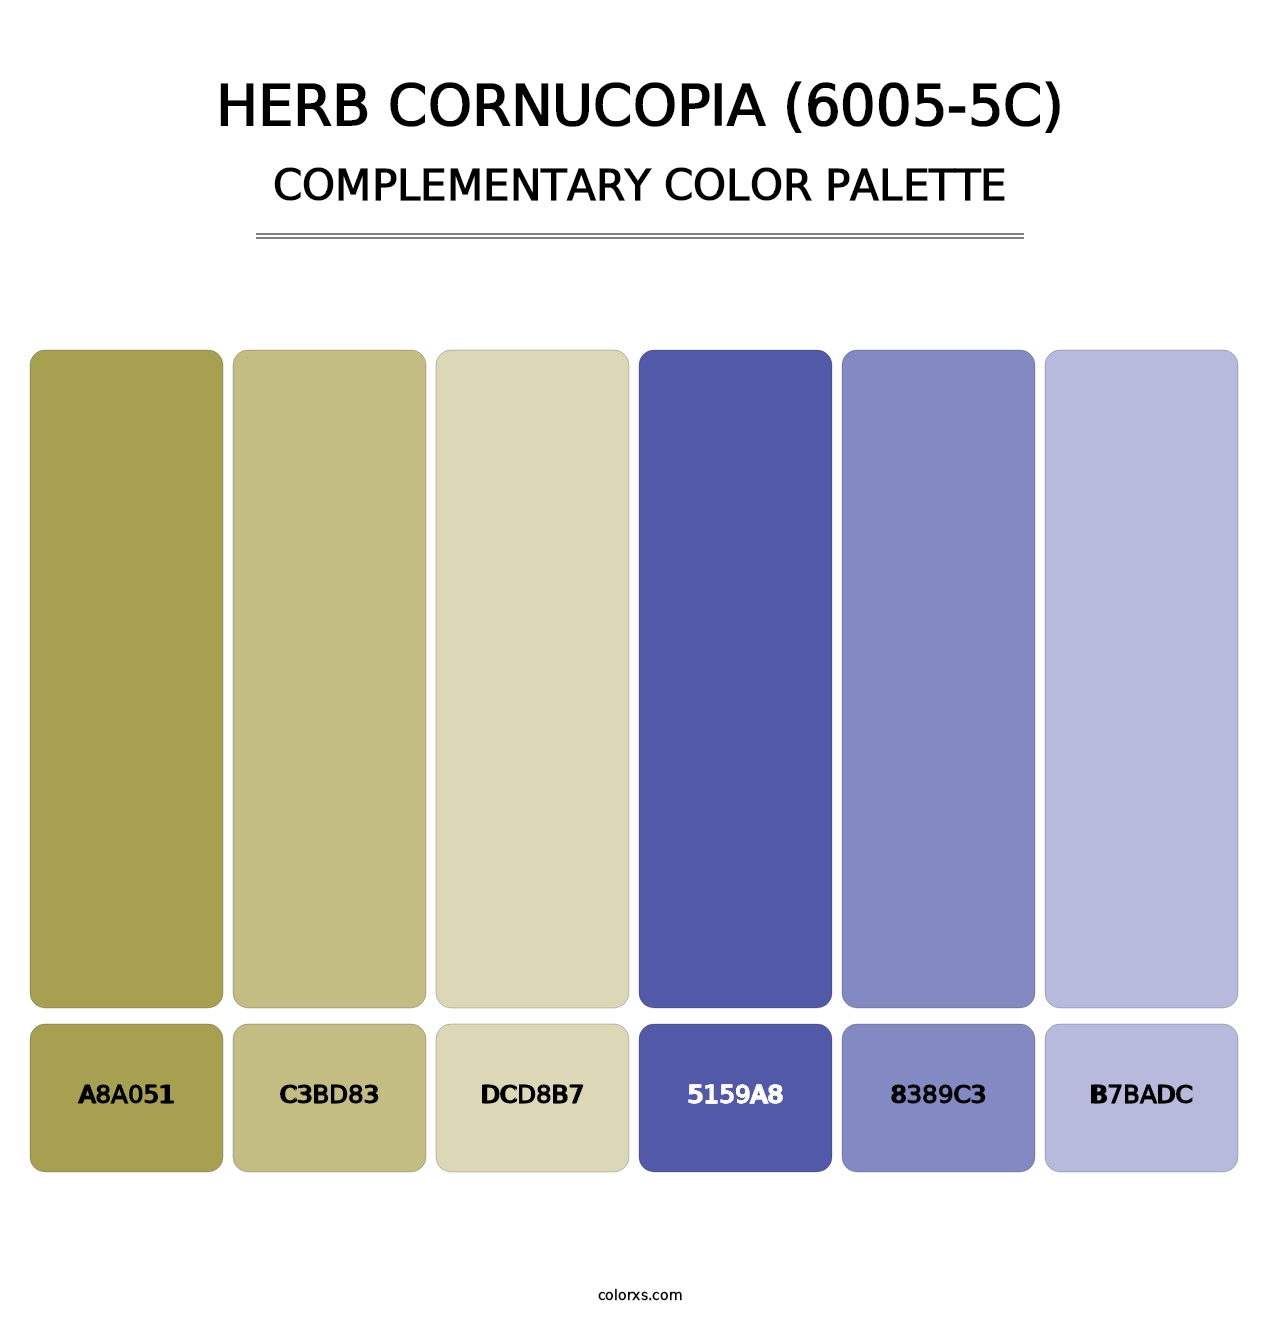 Herb Cornucopia (6005-5C) - Complementary Color Palette